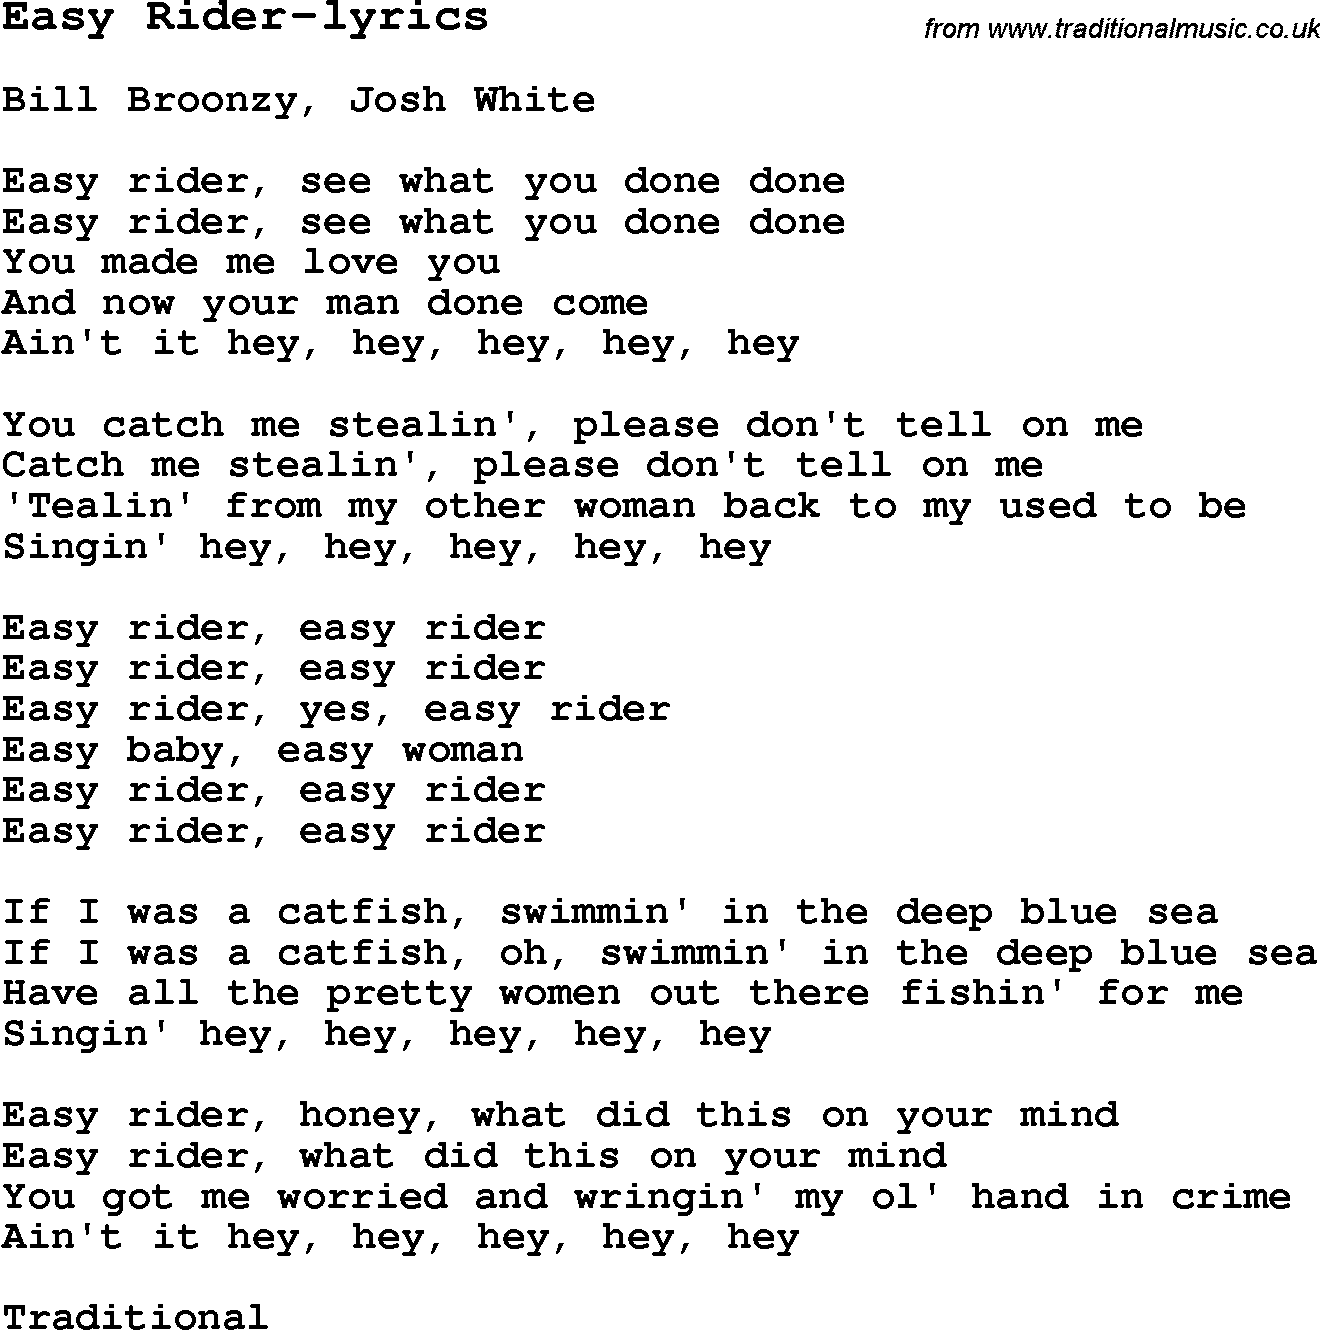 Blues Guitar Song, lyrics, chords, tablature, playing hints for Easy Rider-lyrics